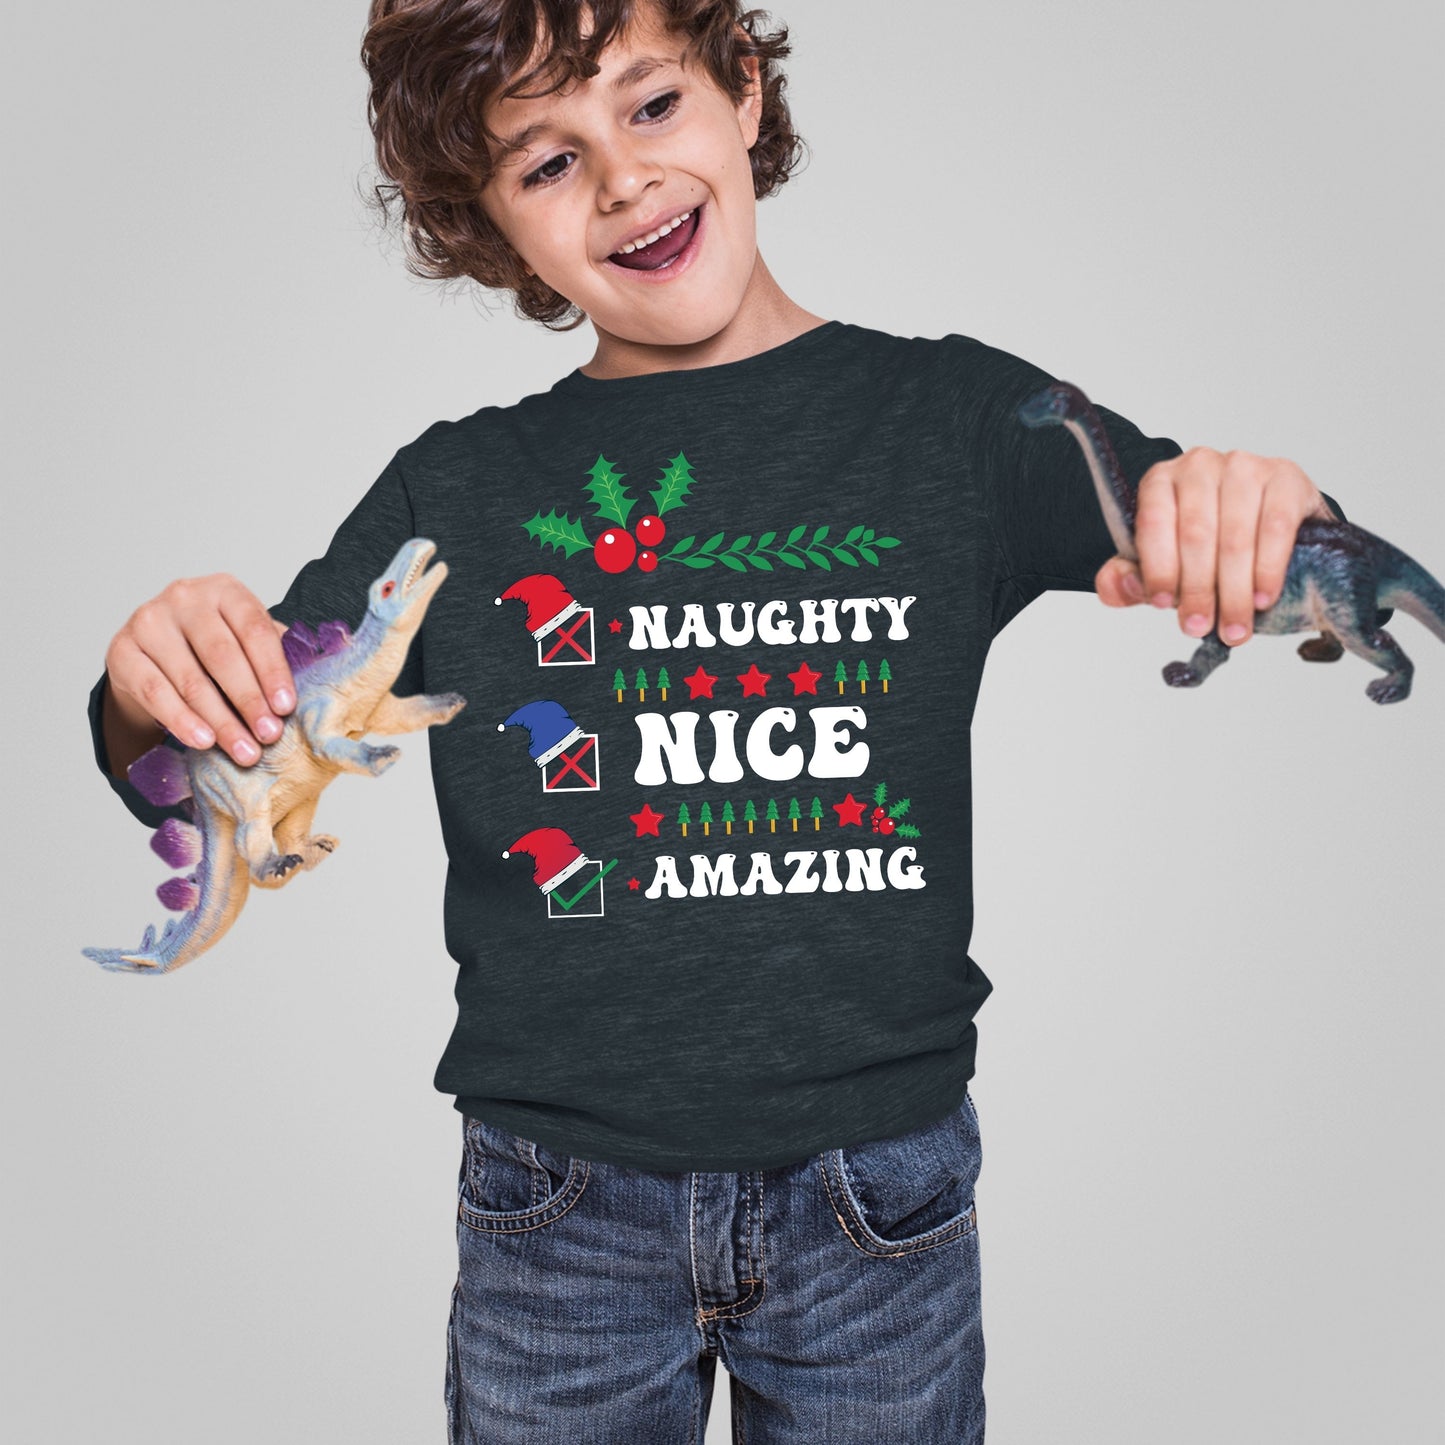 Naughty Nice Amazing, Toddler Long Sleeves, Christmas Clothing, Christmas Sweatshirts, Christmas Shirts, Christmas Decor, Christmas